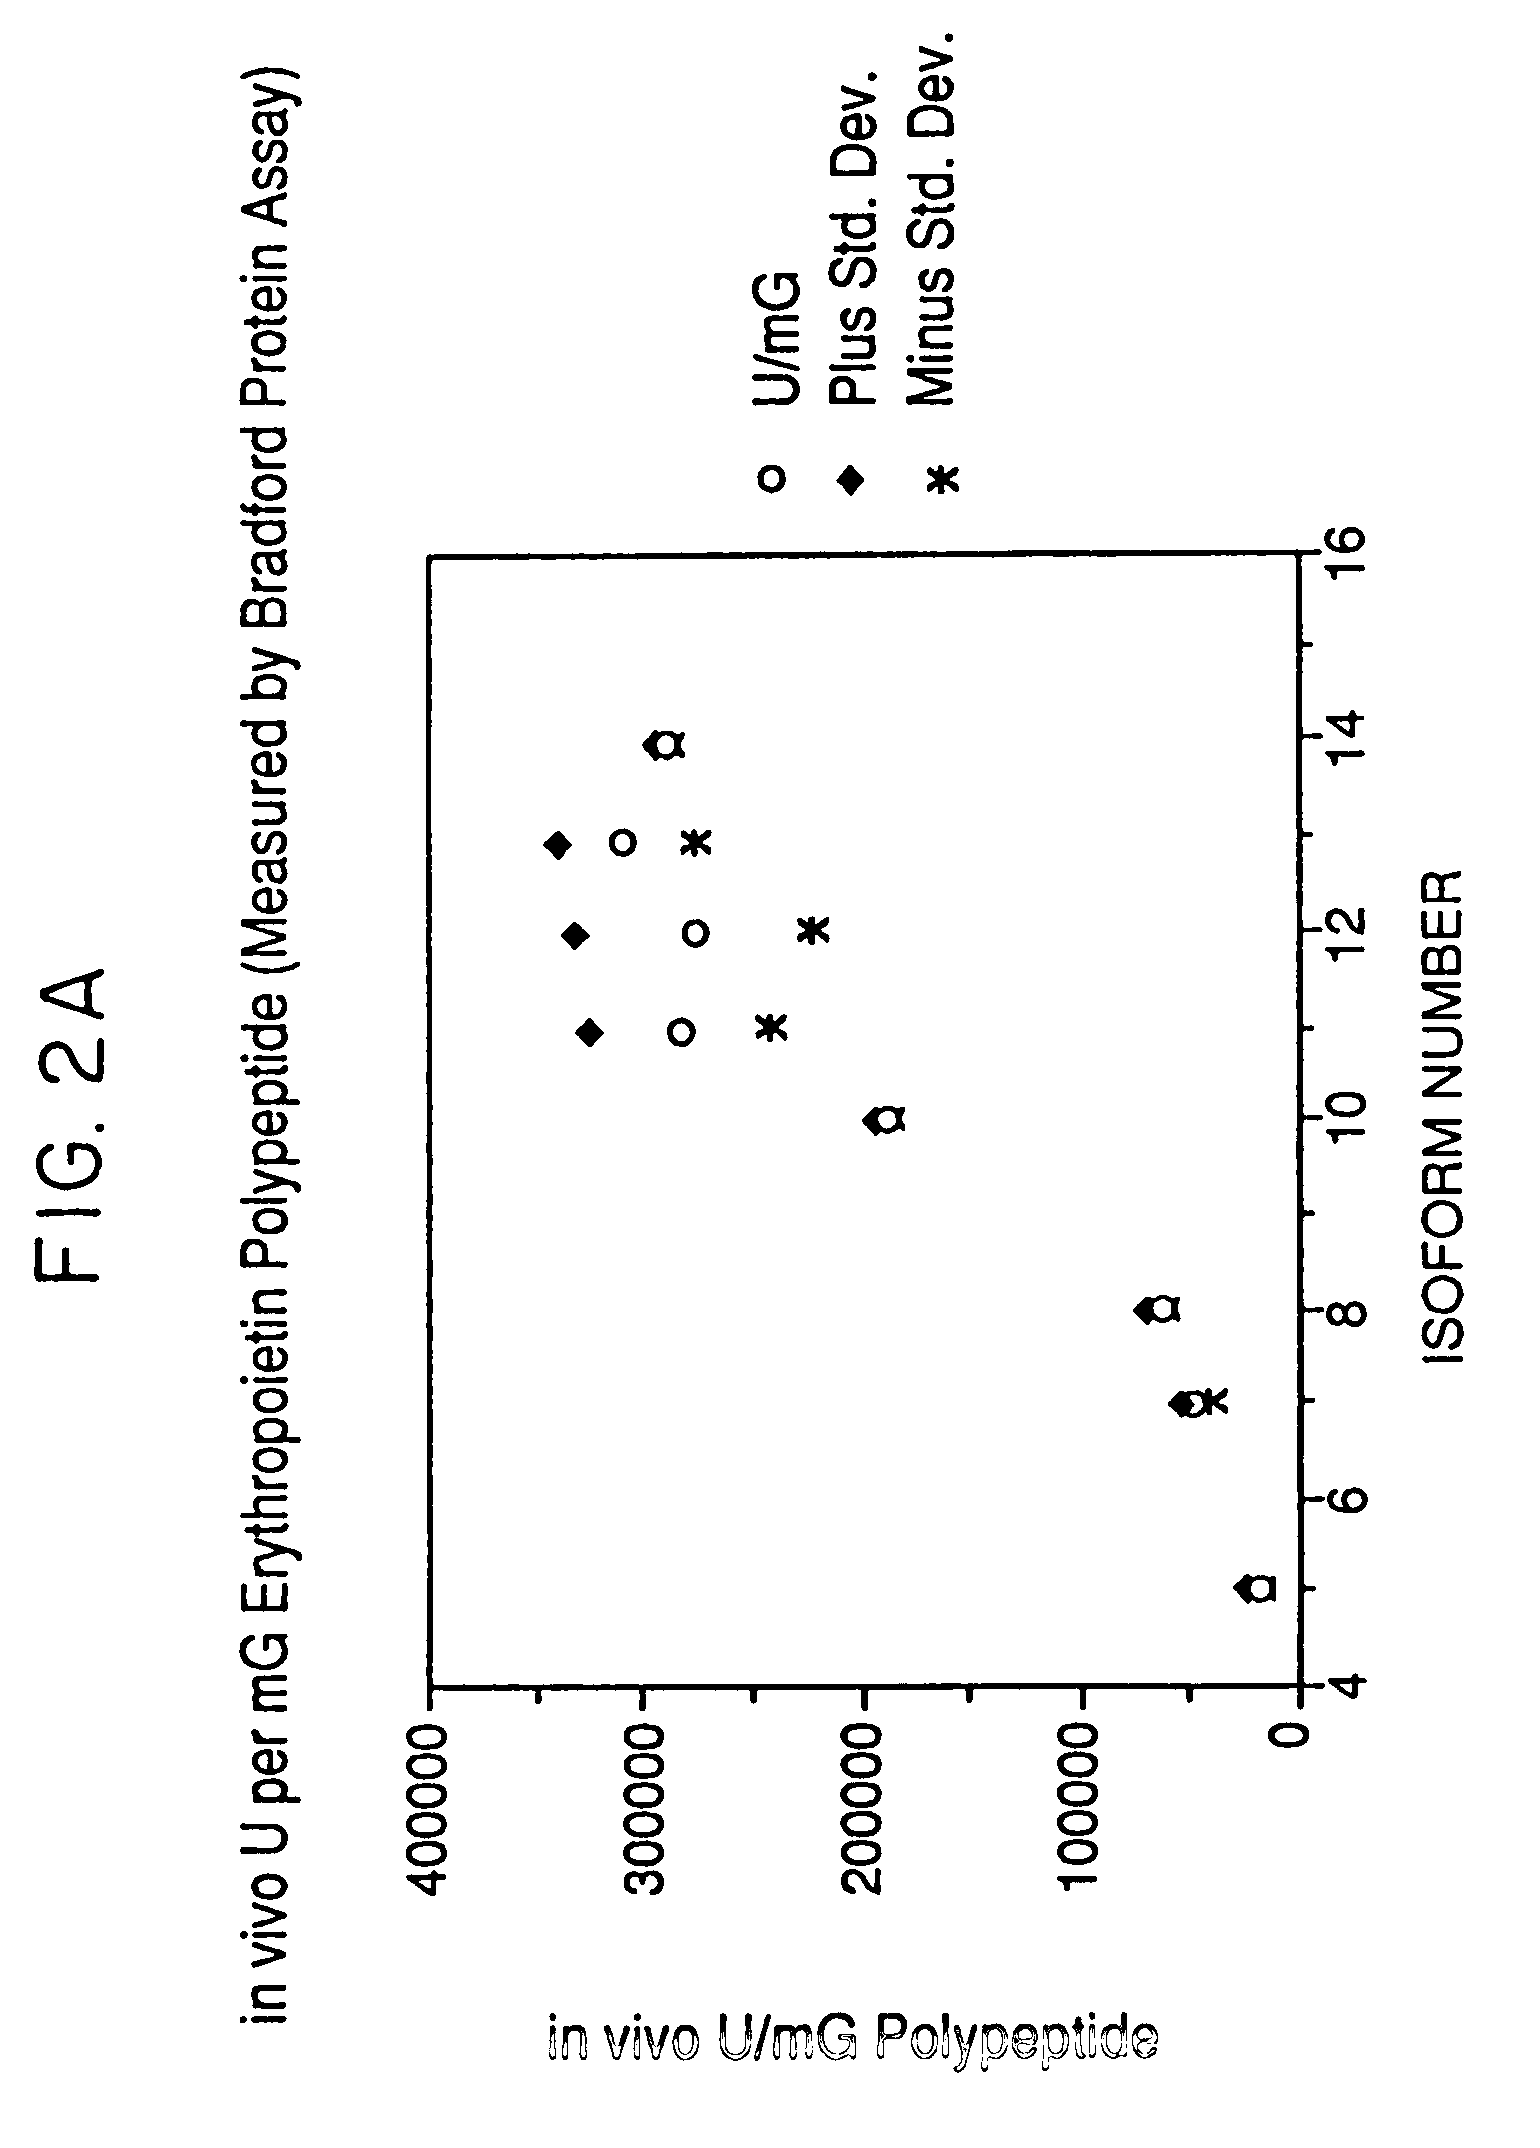 Glycosylation analogs of erythropoietin